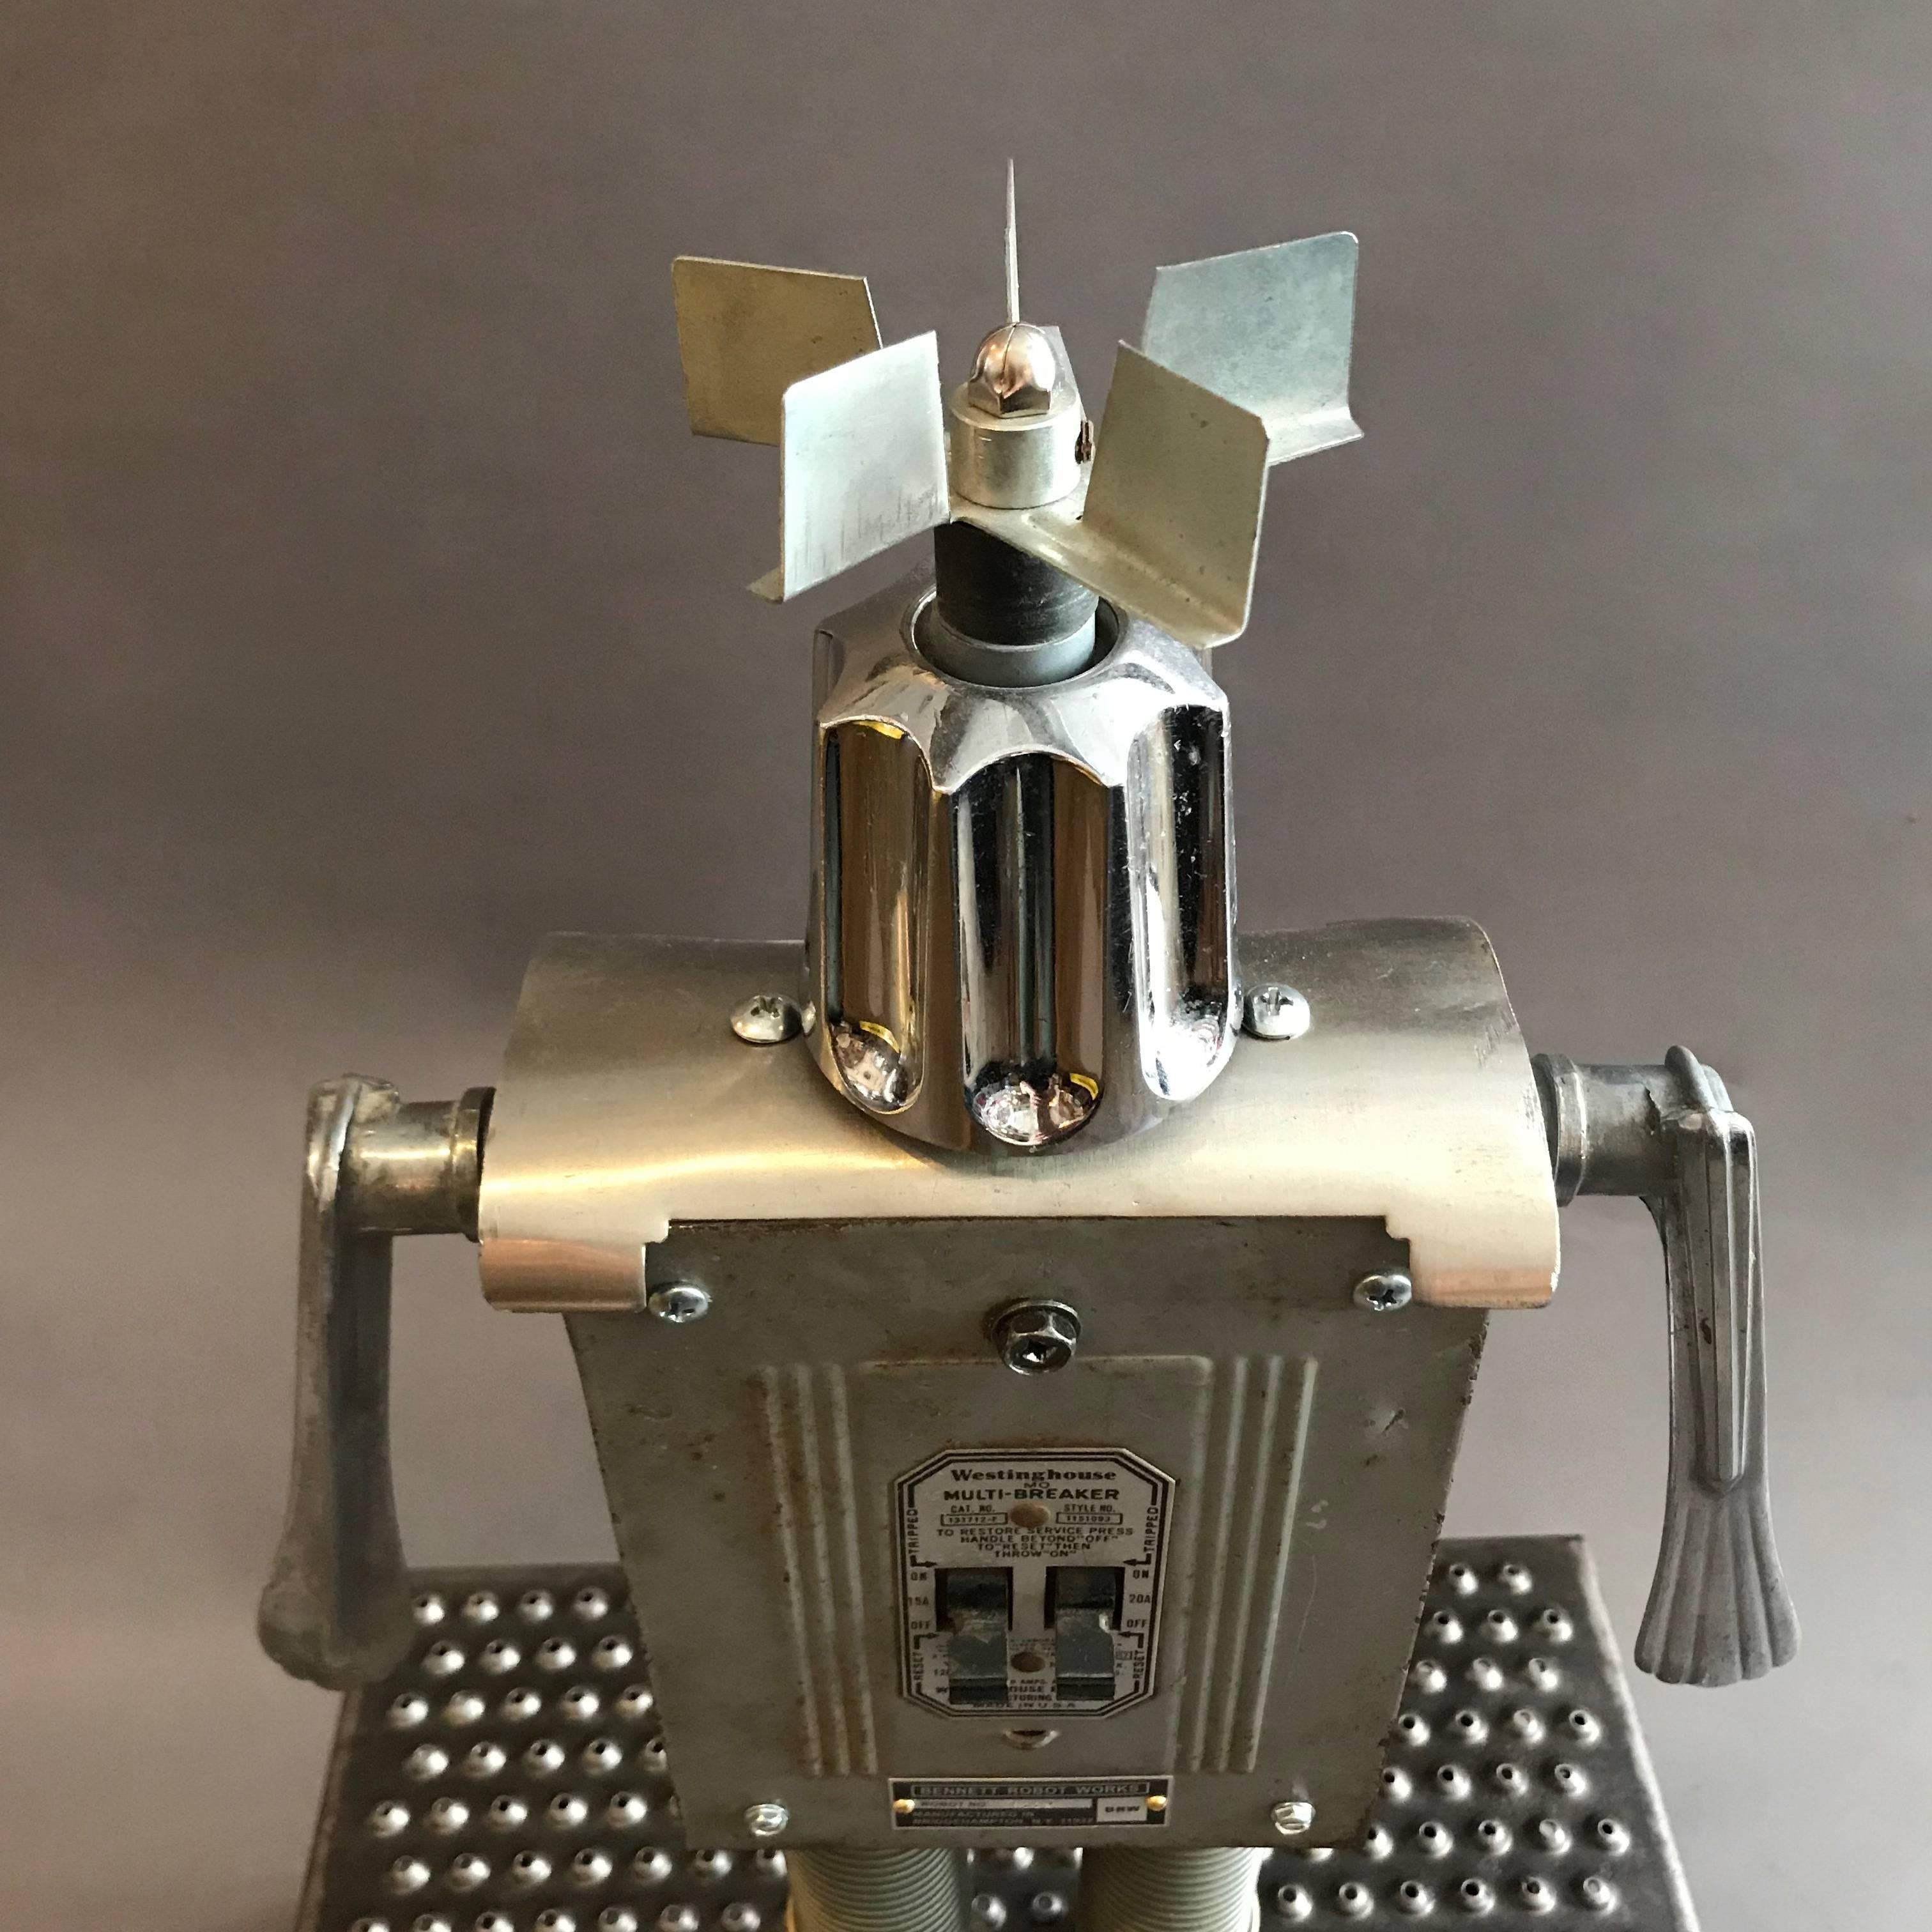 Hand-Crafted Breaker Robot Sculpture By Bennett Robot Works